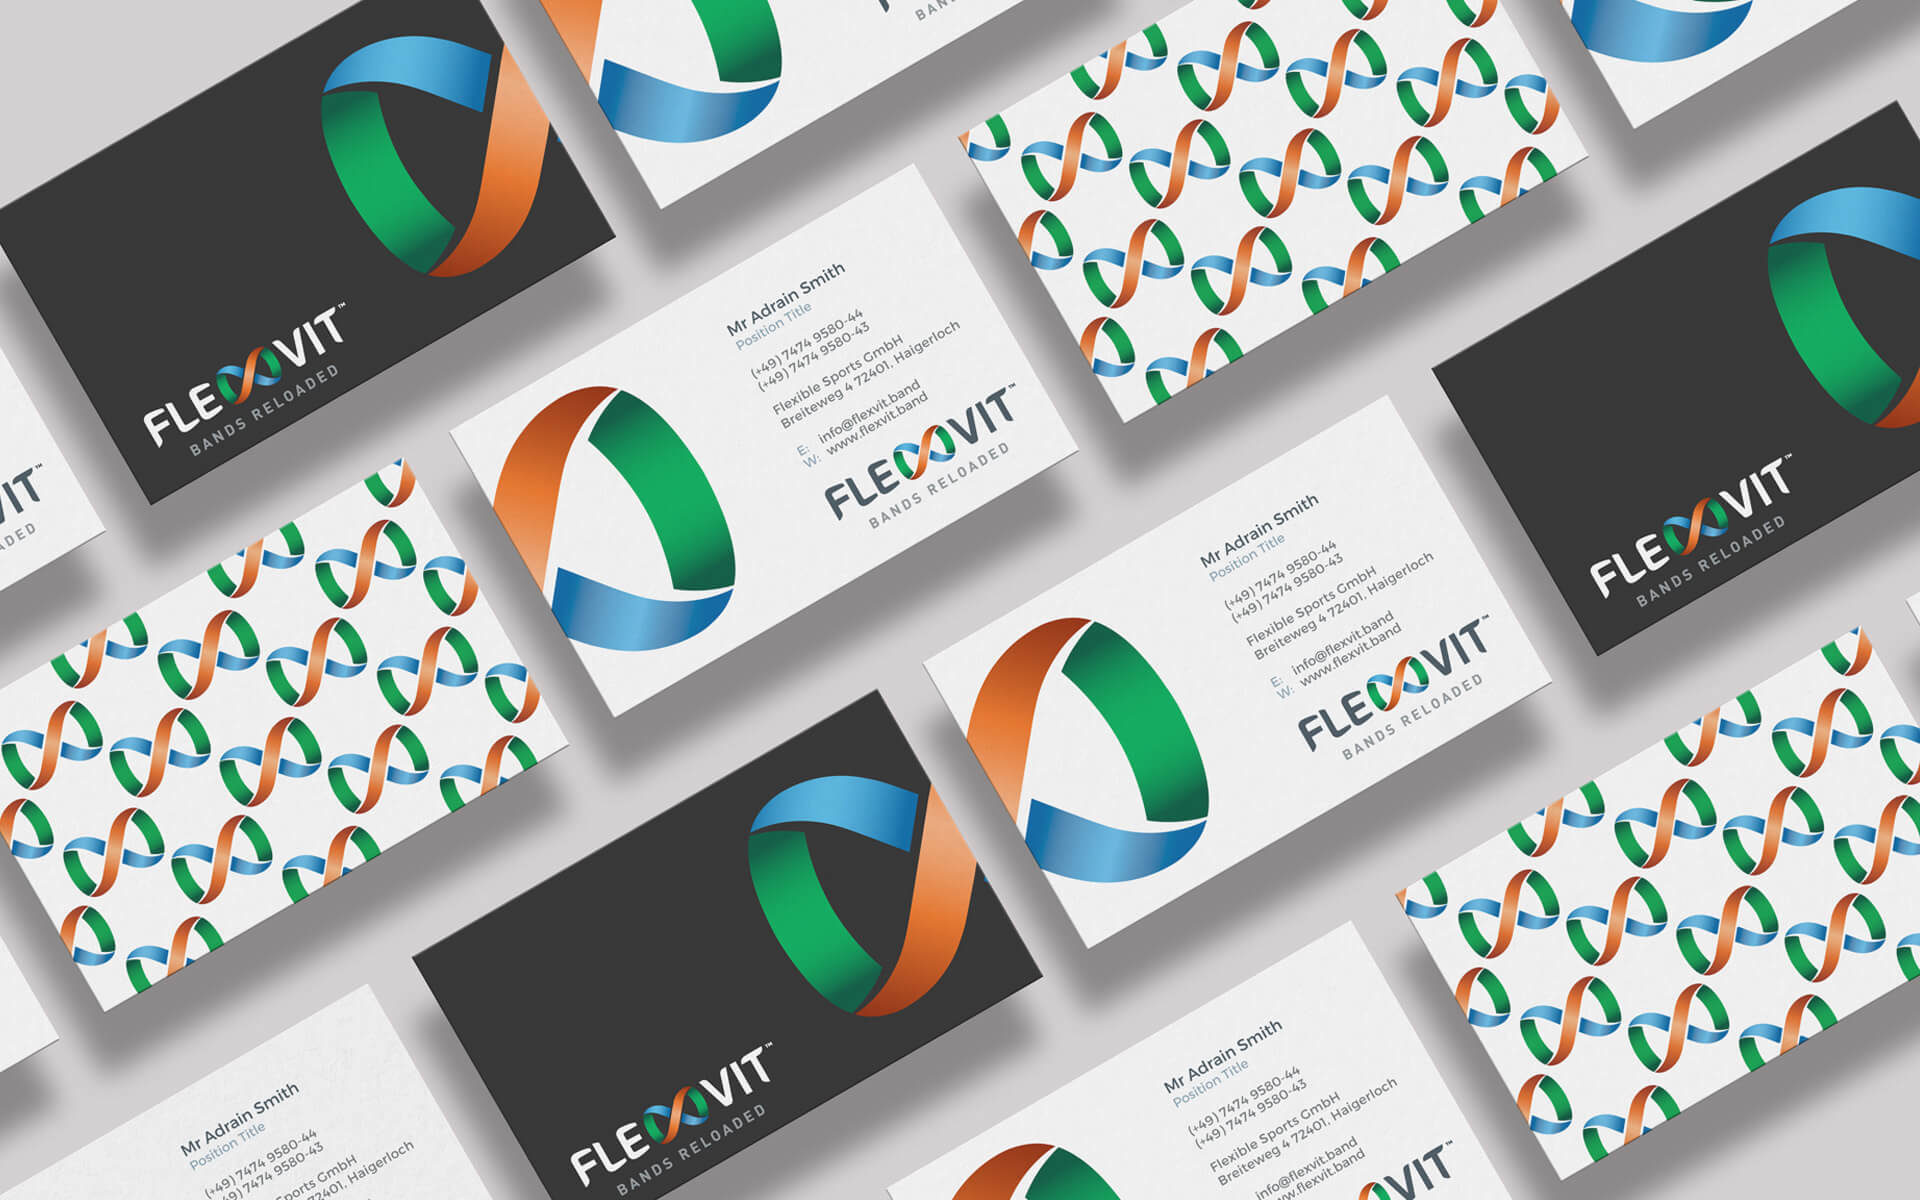 Flexvit-Business-Card-1